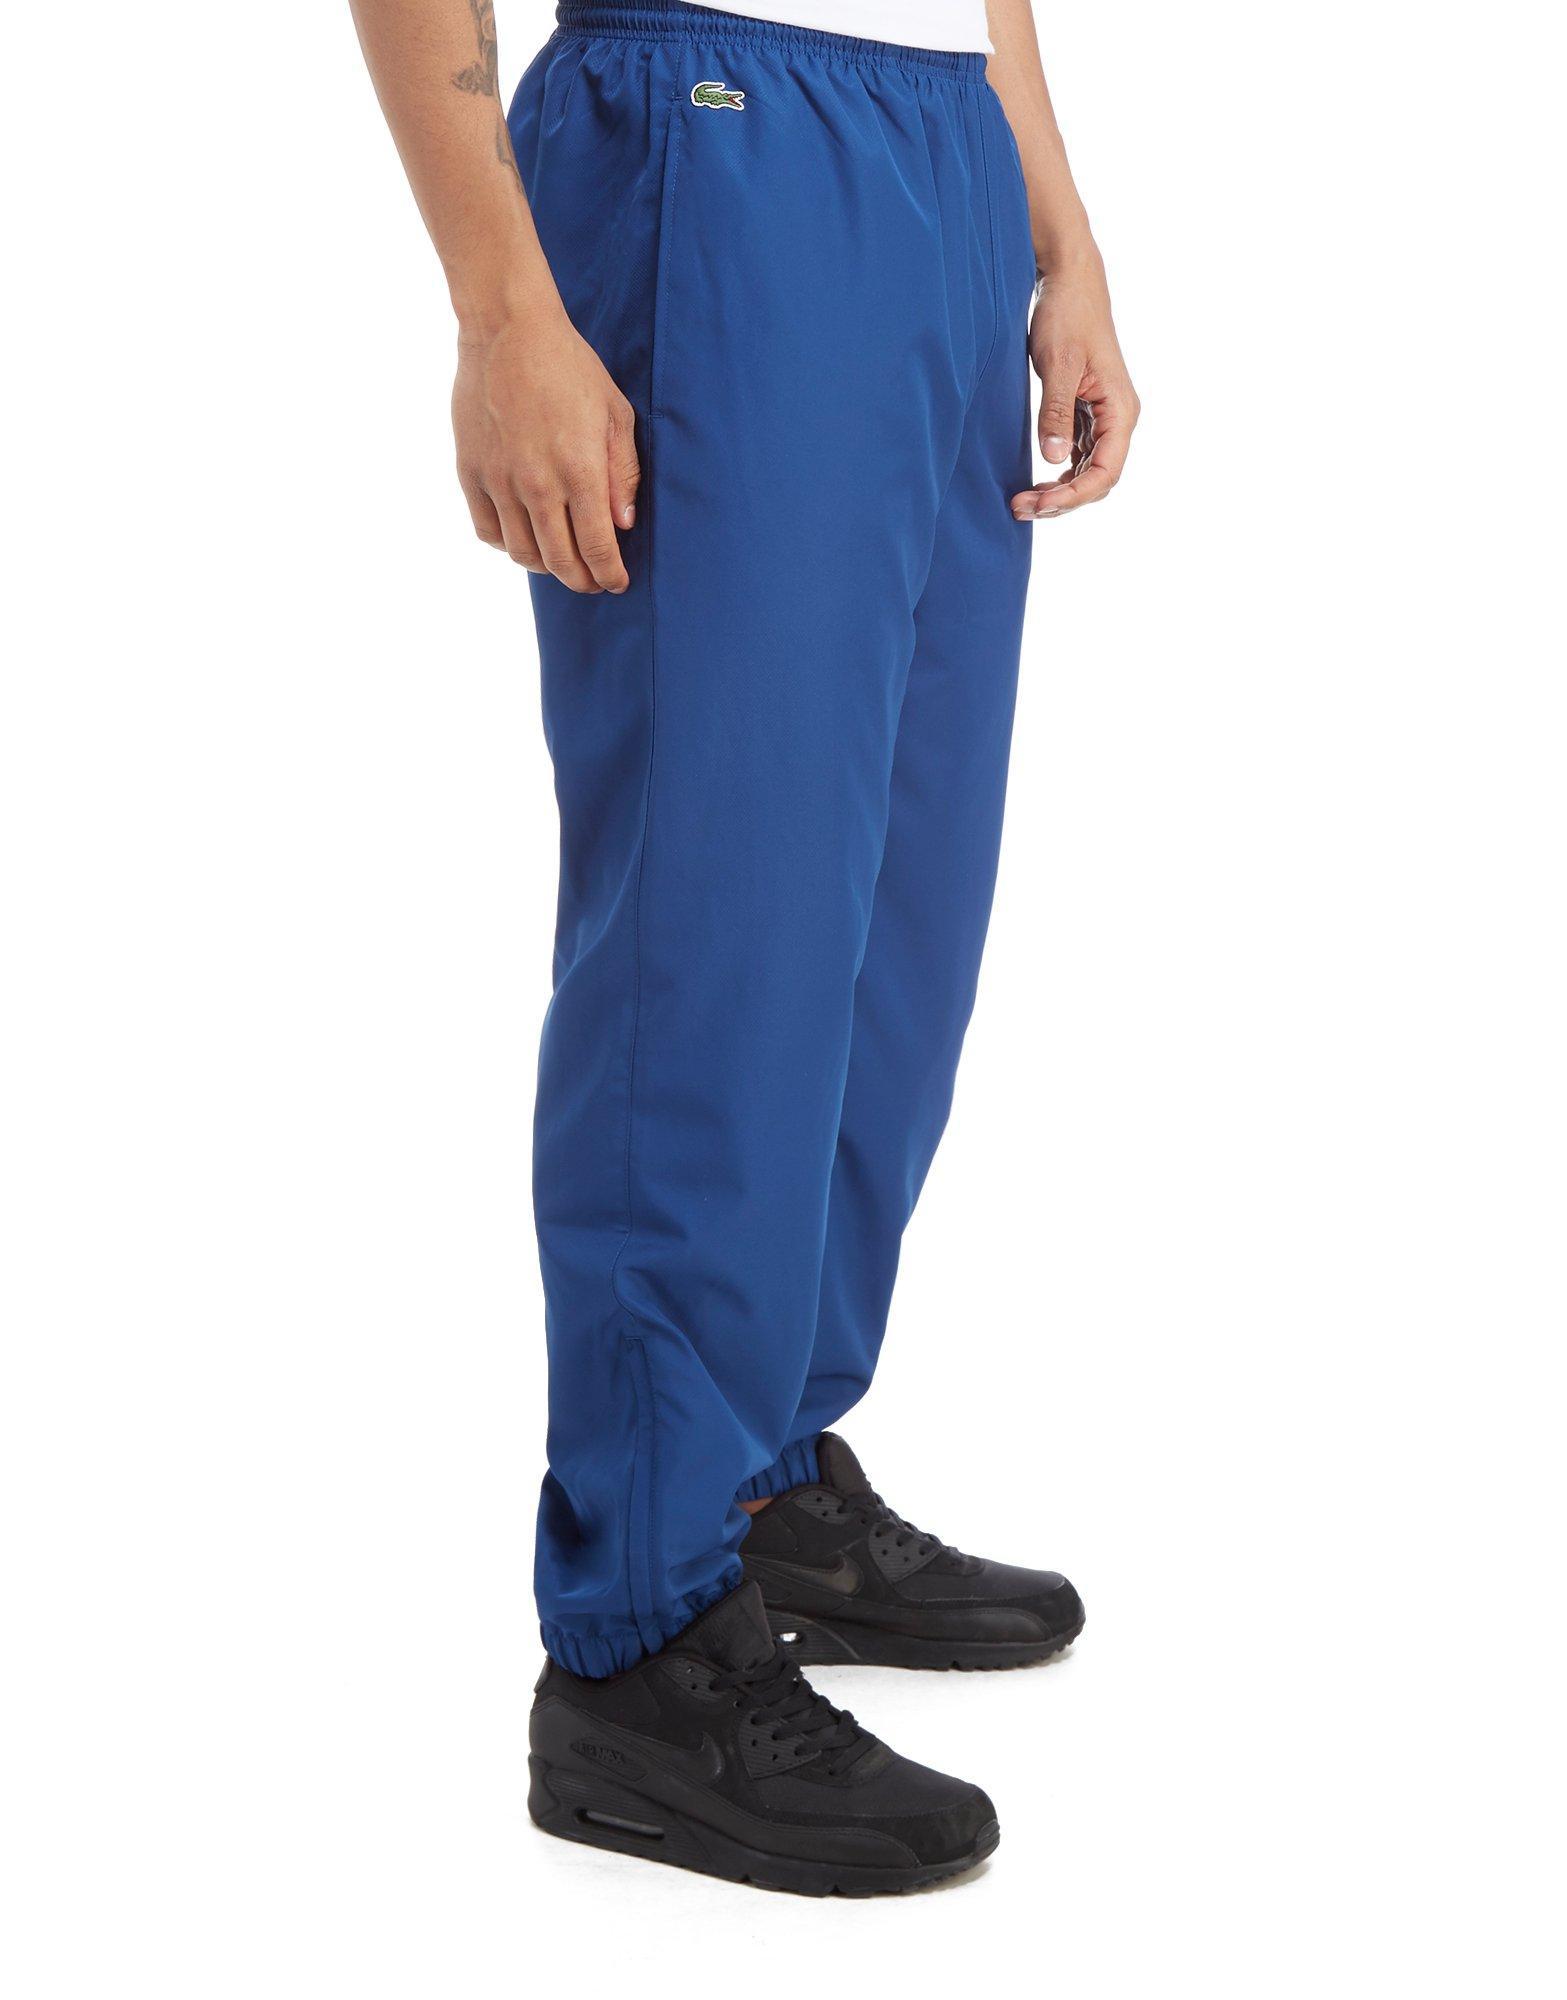 blue lacoste guppy pants